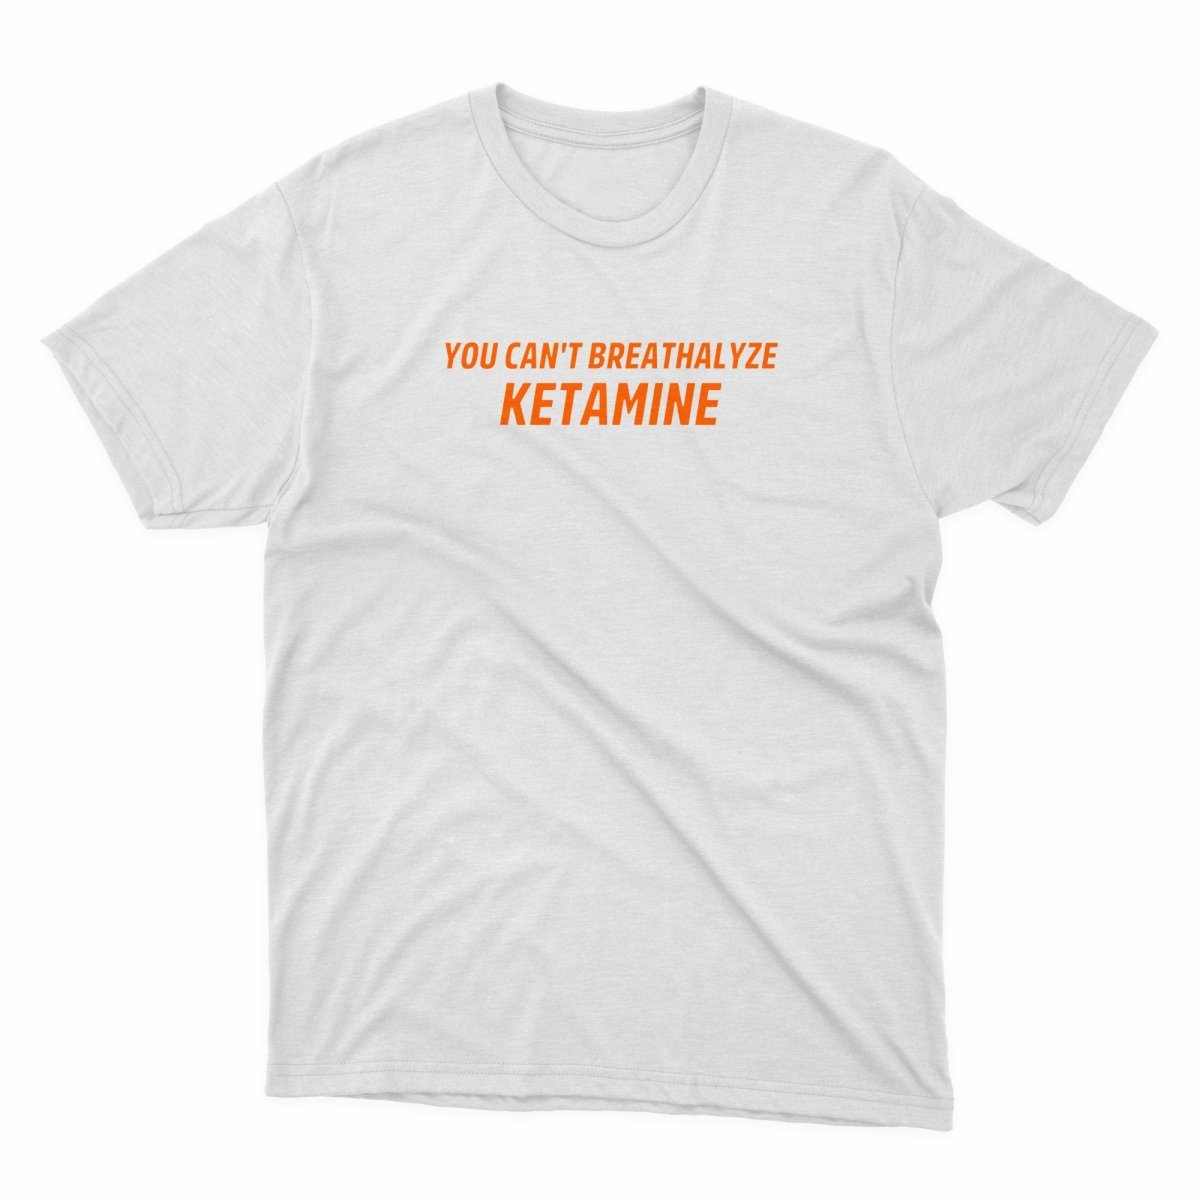 You Can't Breathalyze Ketamine Shirt - stickerbullYou Can't Breathalyze Ketamine ShirtShirtsPrintifystickerbull26183436746304640543WhiteSa white t - shirt with the words you can't breathe ketamine